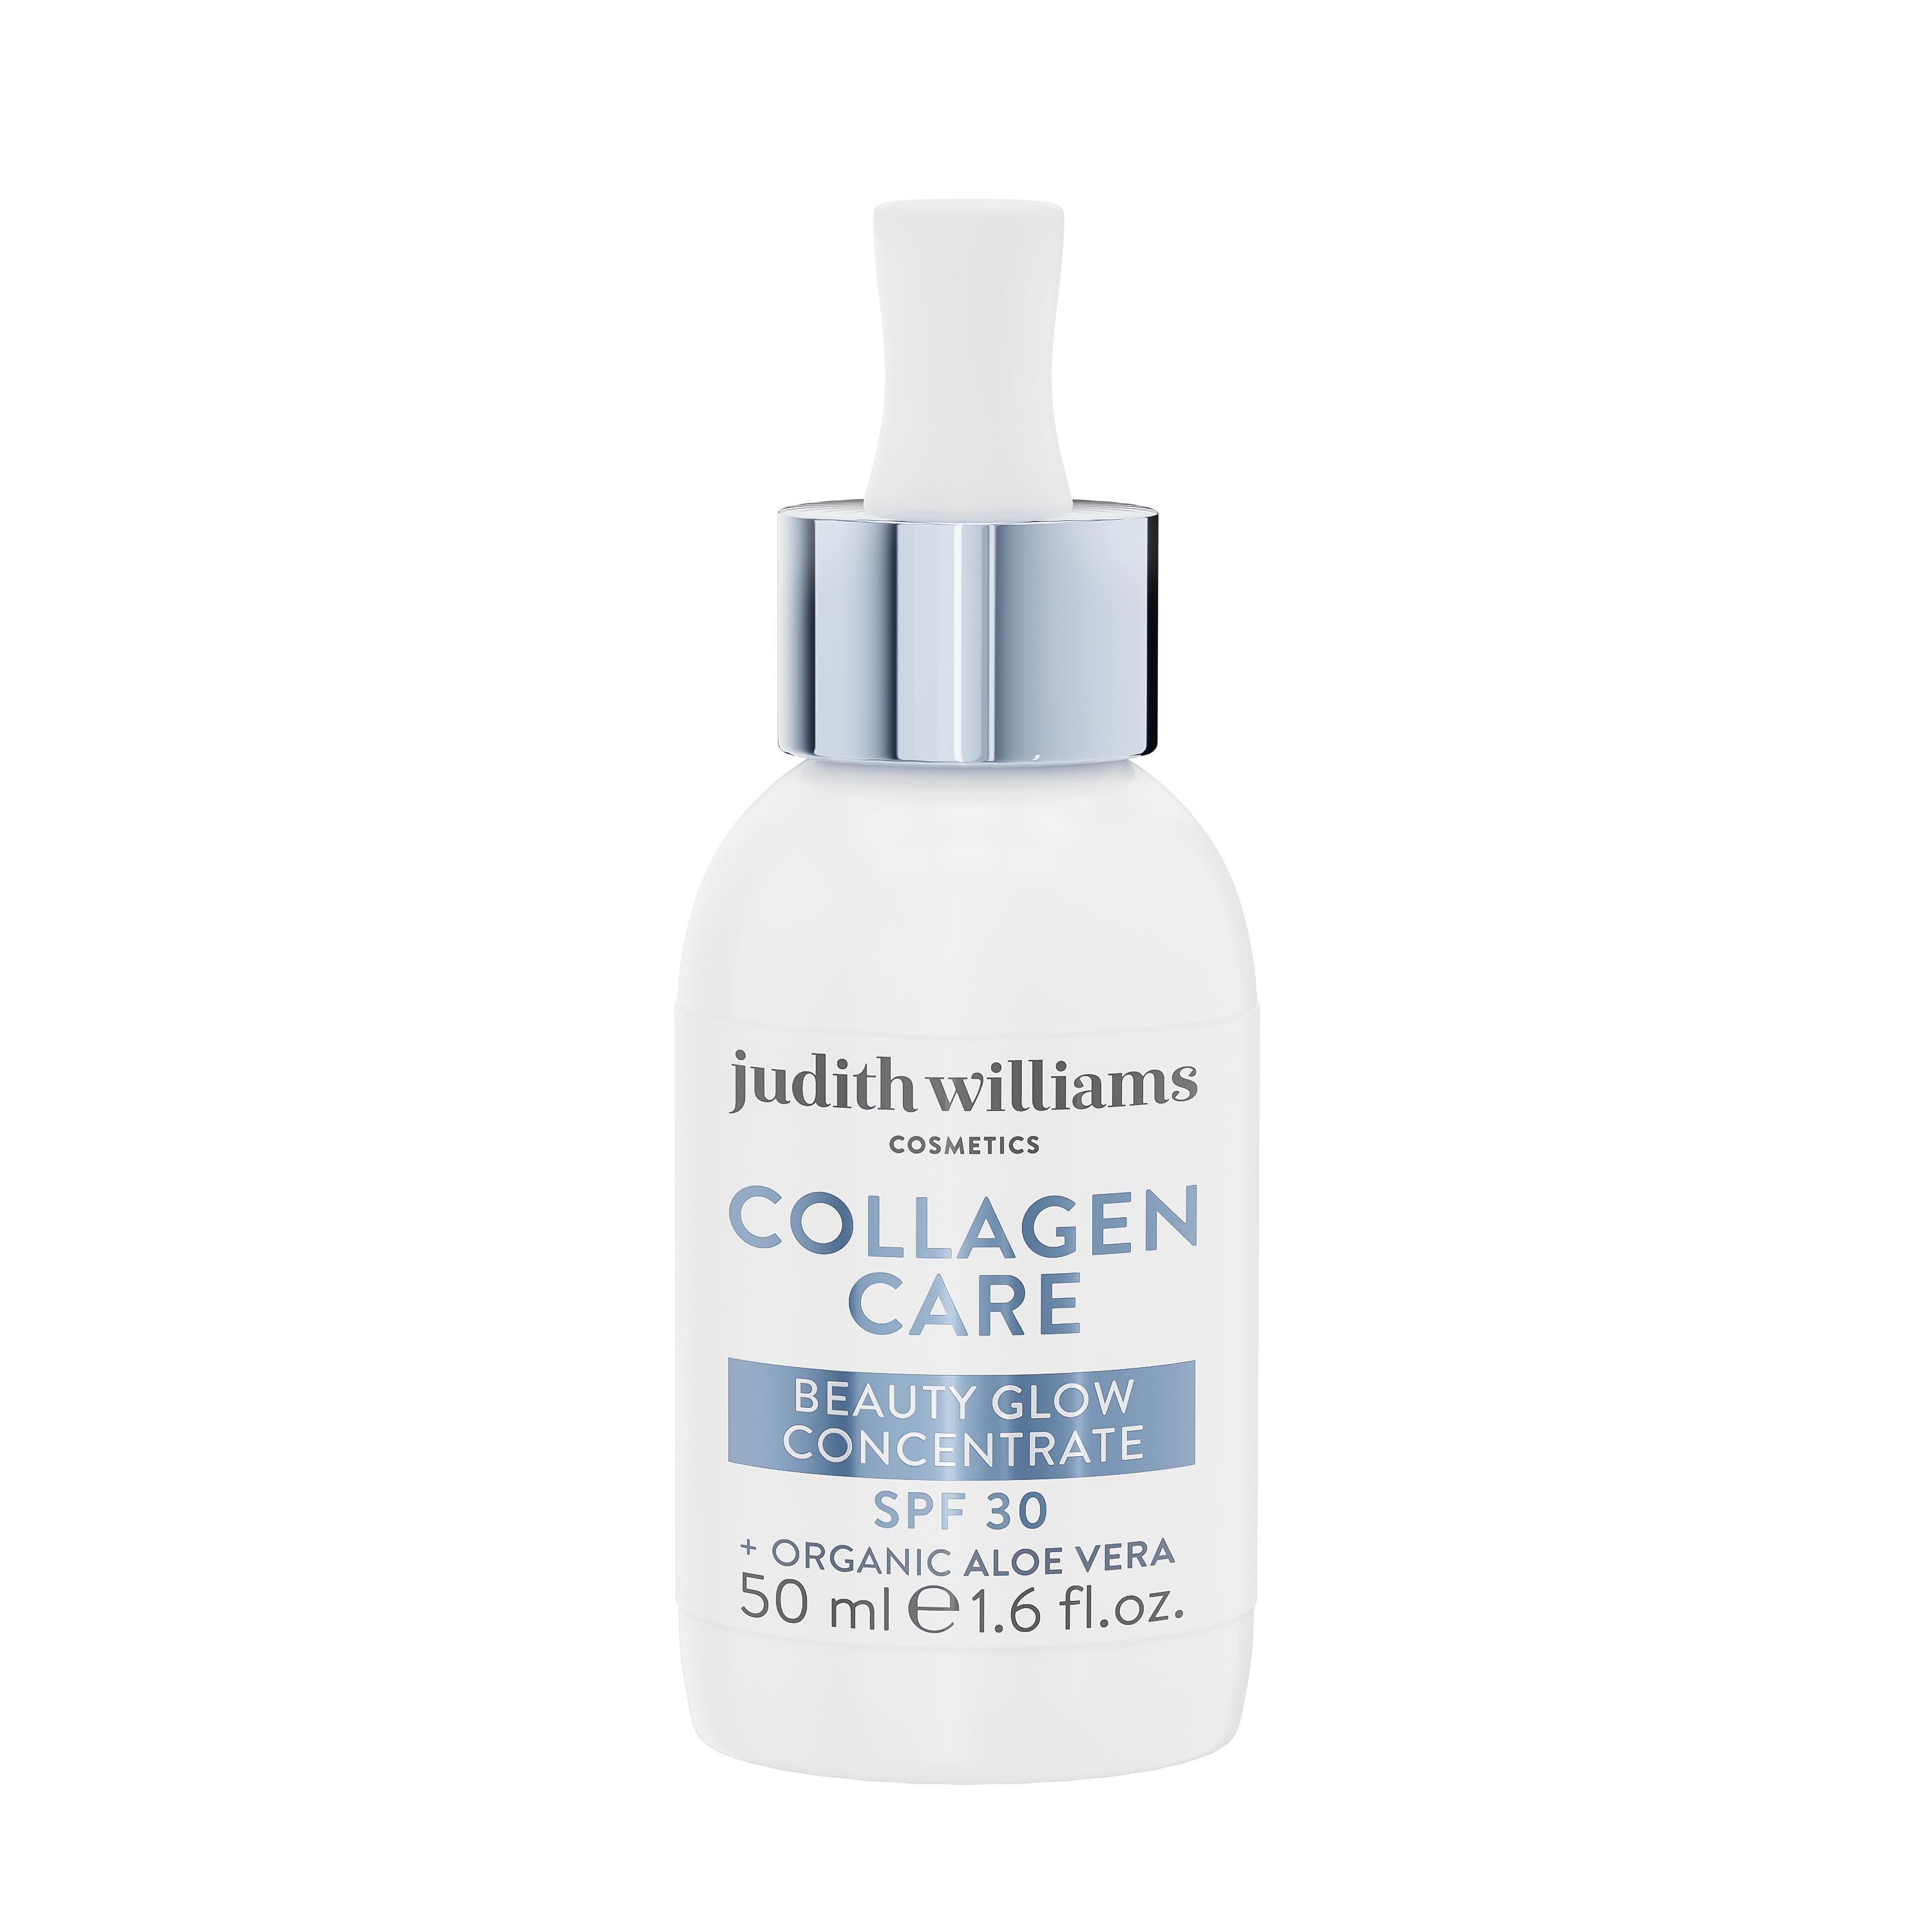 Gesichtskonzentrat | Collagen Care | Beauty Glow Concentrate SPF 30 | Judith Williams